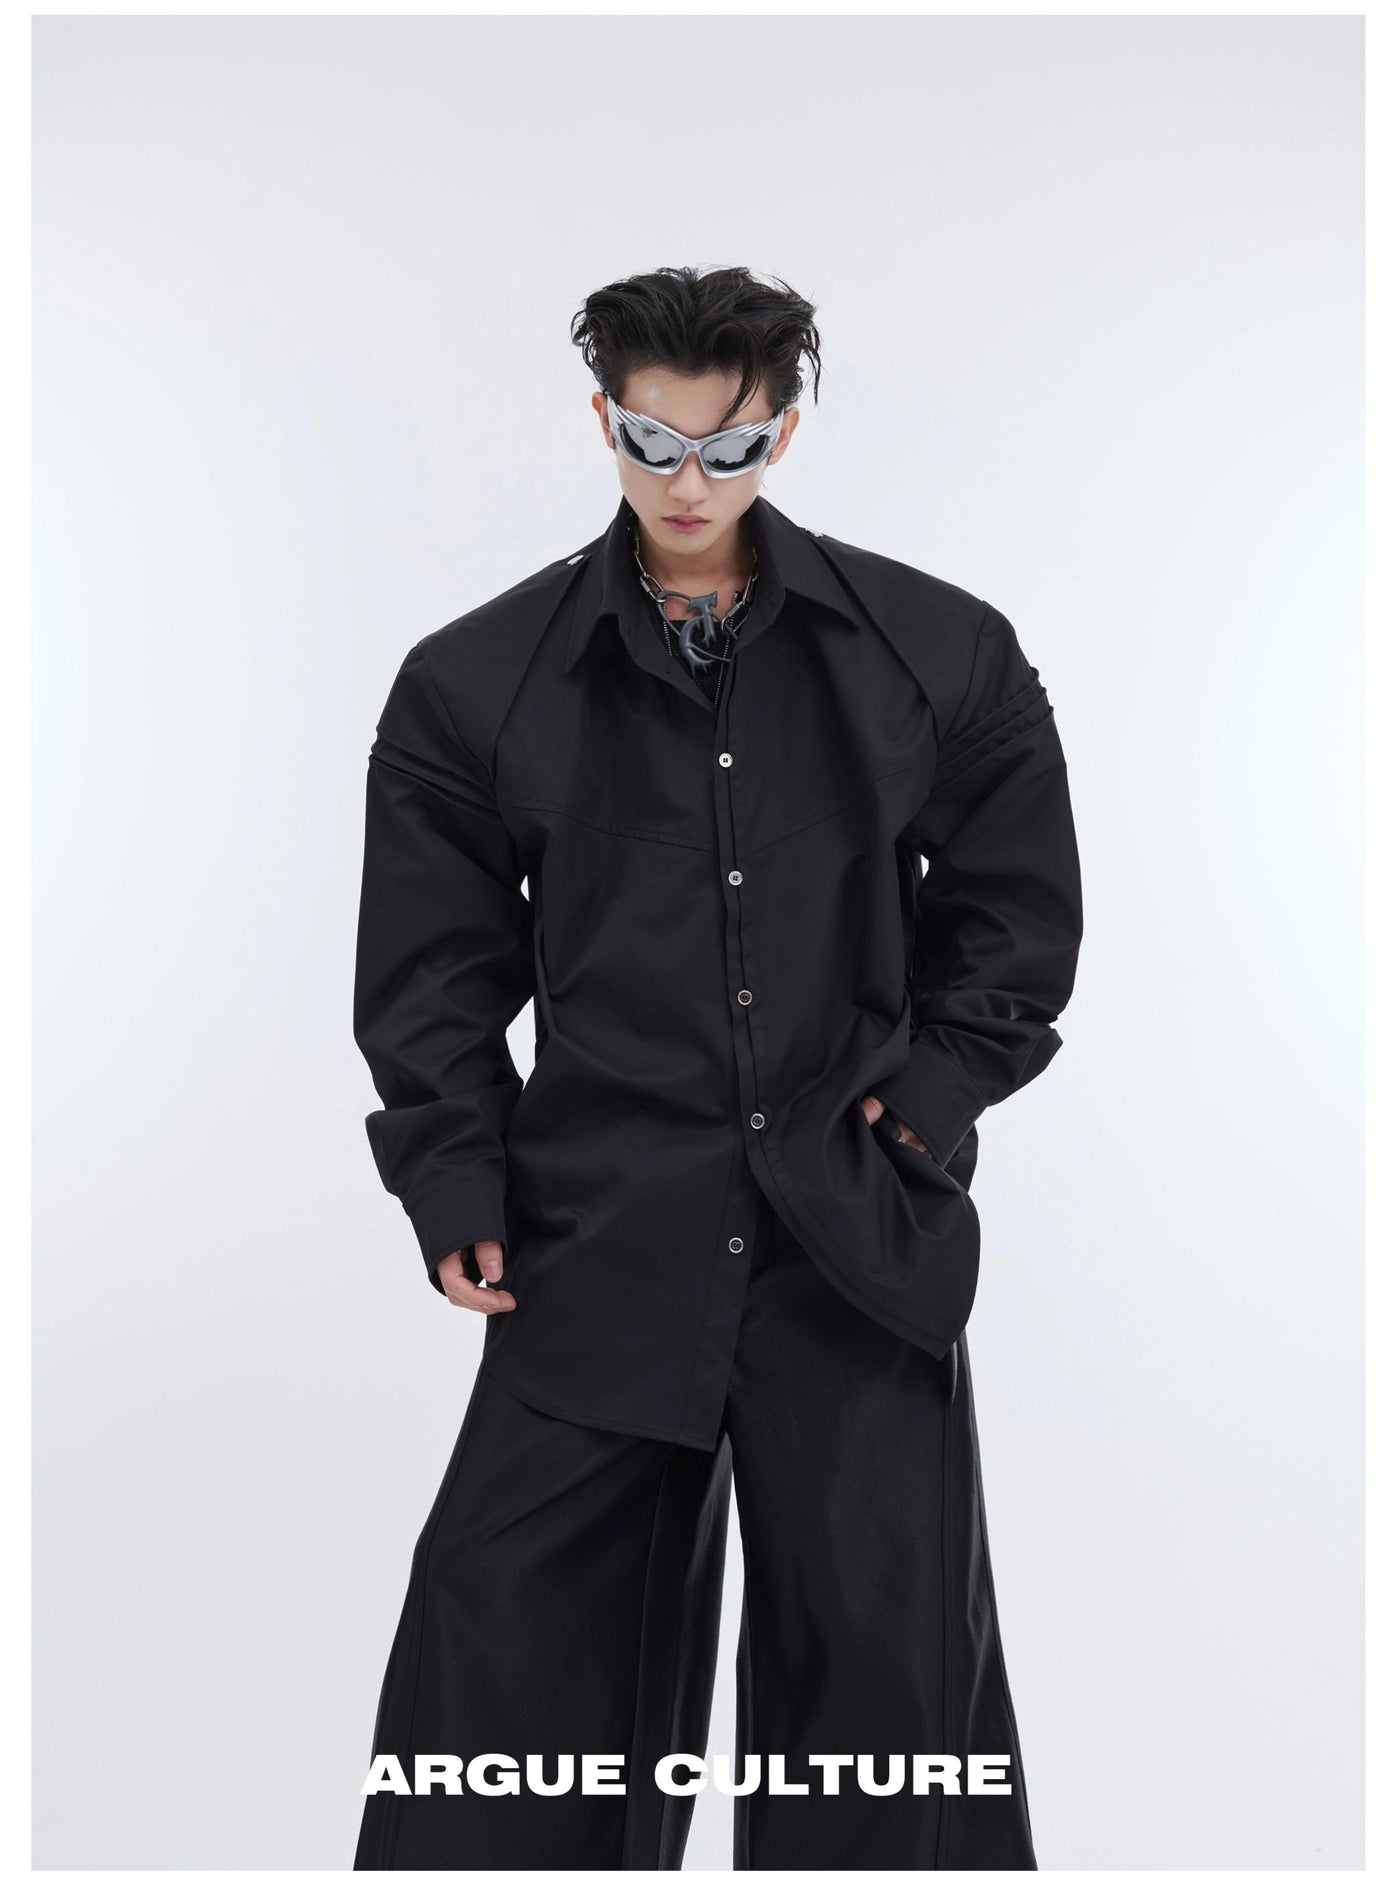 Deconstructed Shoulder Pad Shirt Korean Street Fashion Shirt By Argue Culture Shop Online at OH Vault